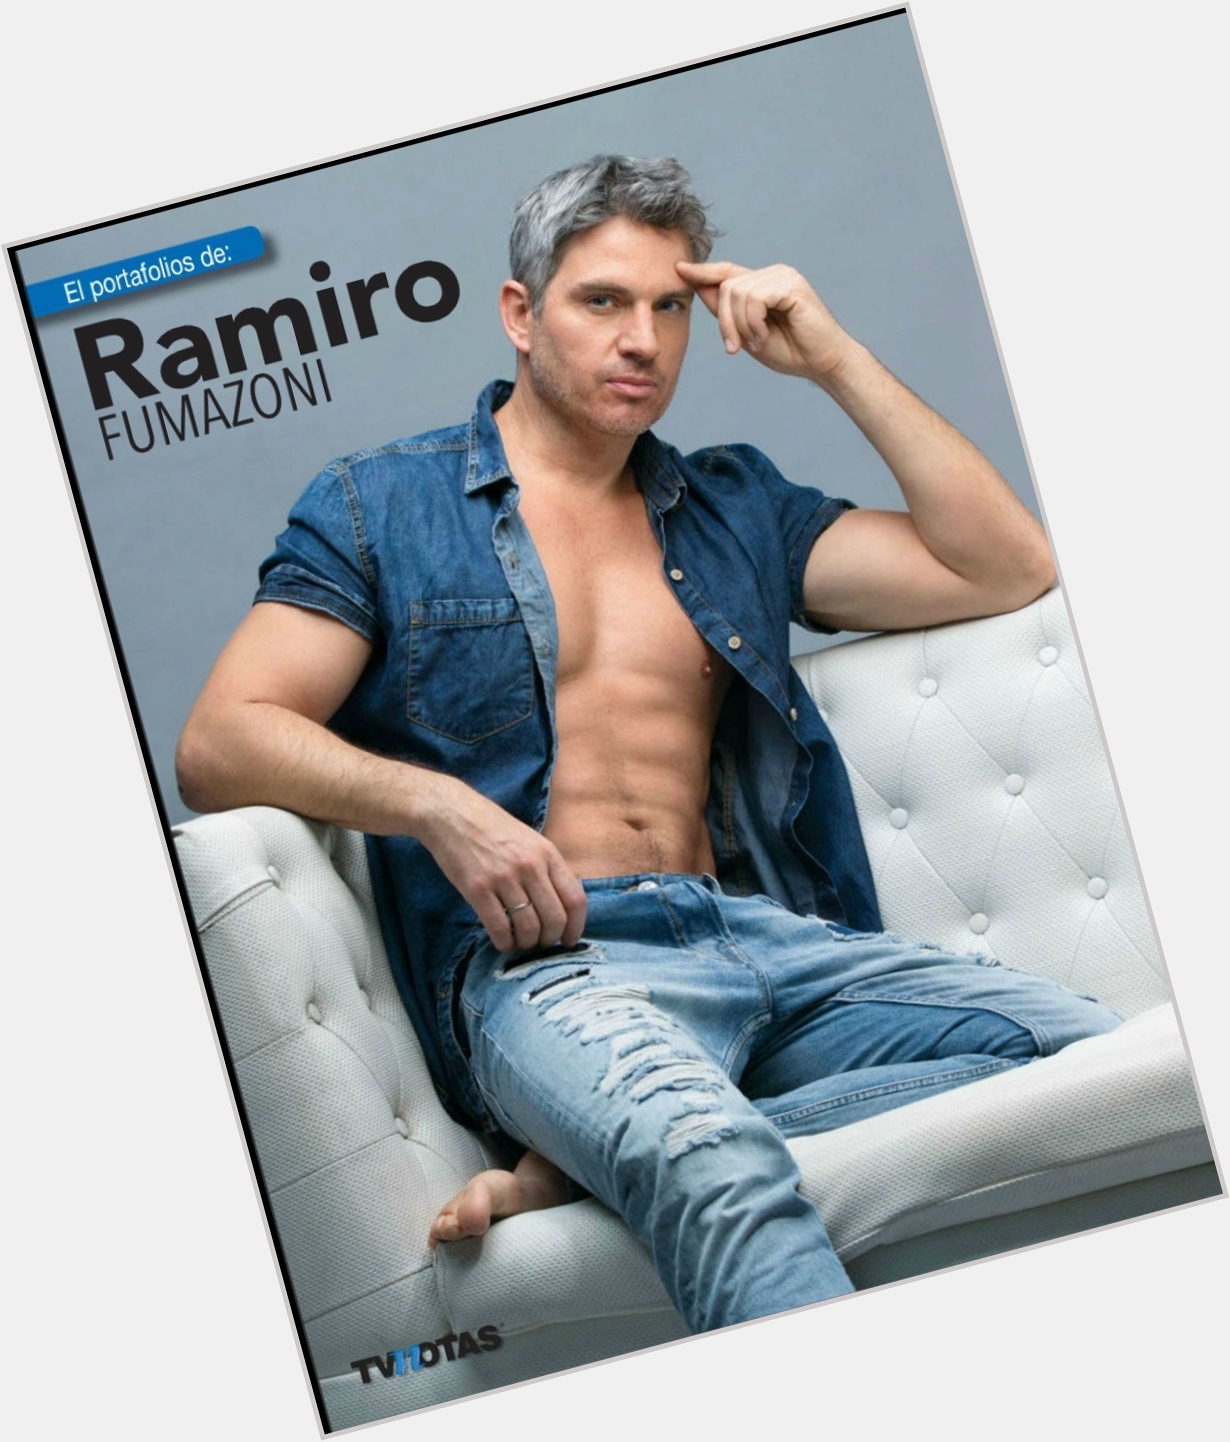 Ramiro Fumazoni Athletic body,  dark brown hair & hairstyles